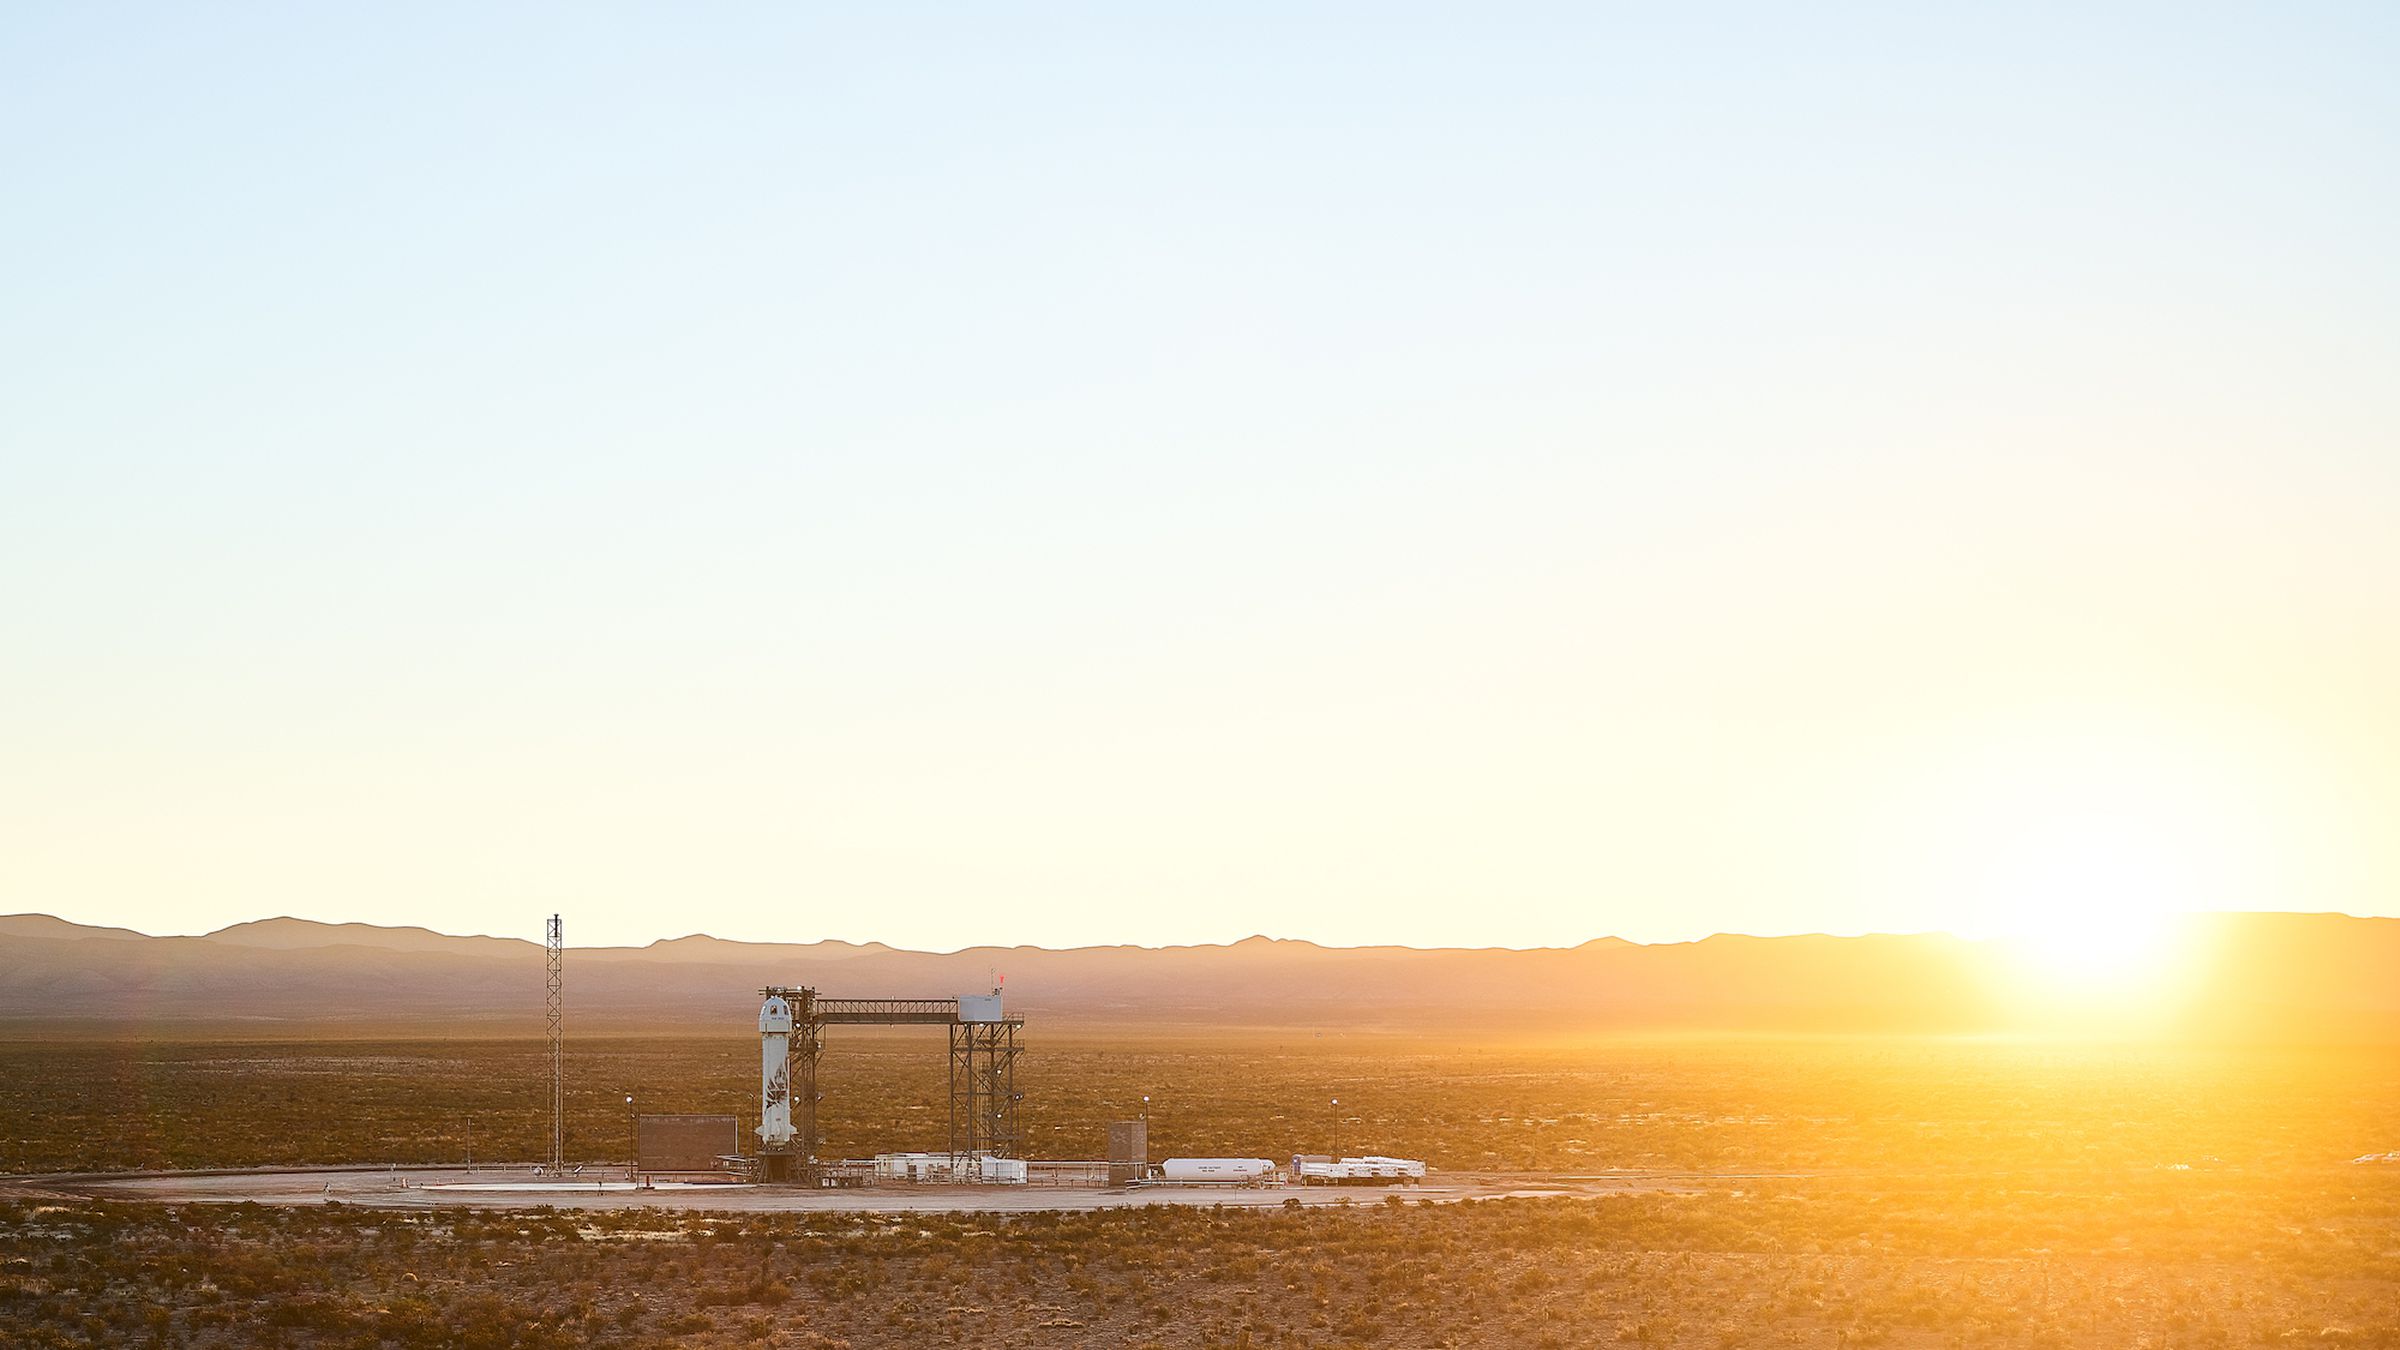 Blue Origin’s New Shepard rocket on the launchpad in Texas.